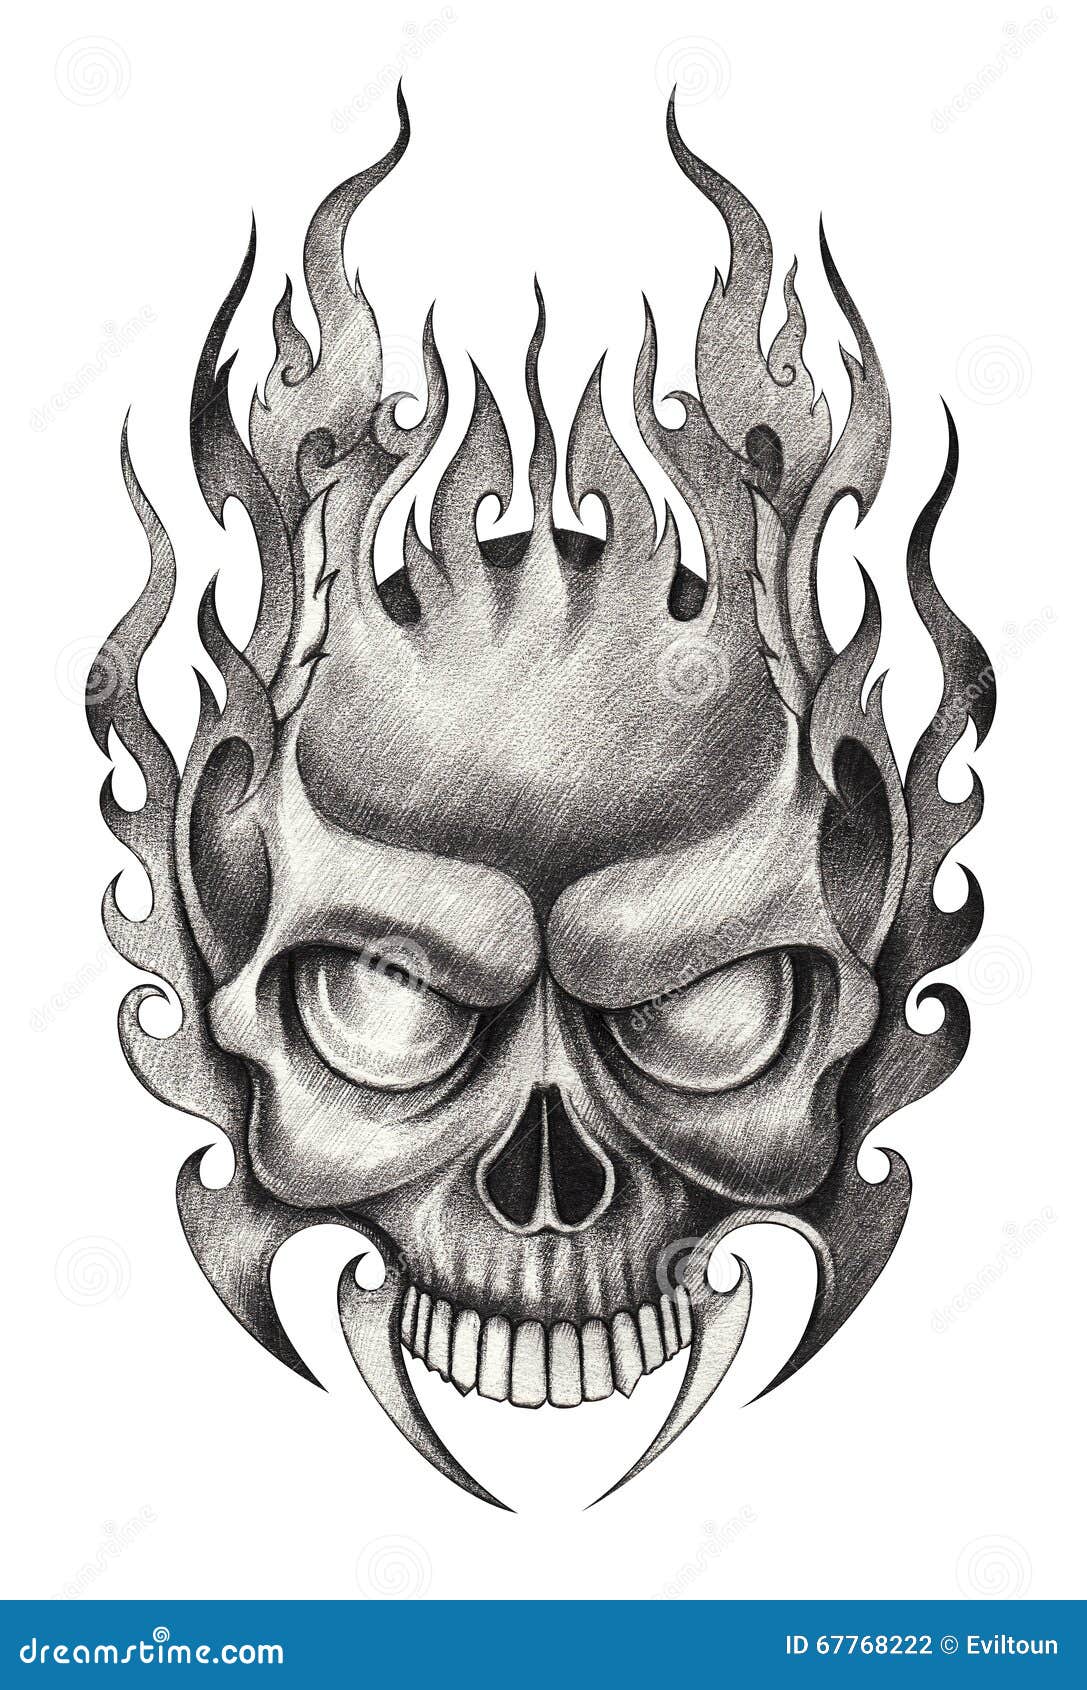 Evil Skull Tattoo Designs| Tattoodesigns